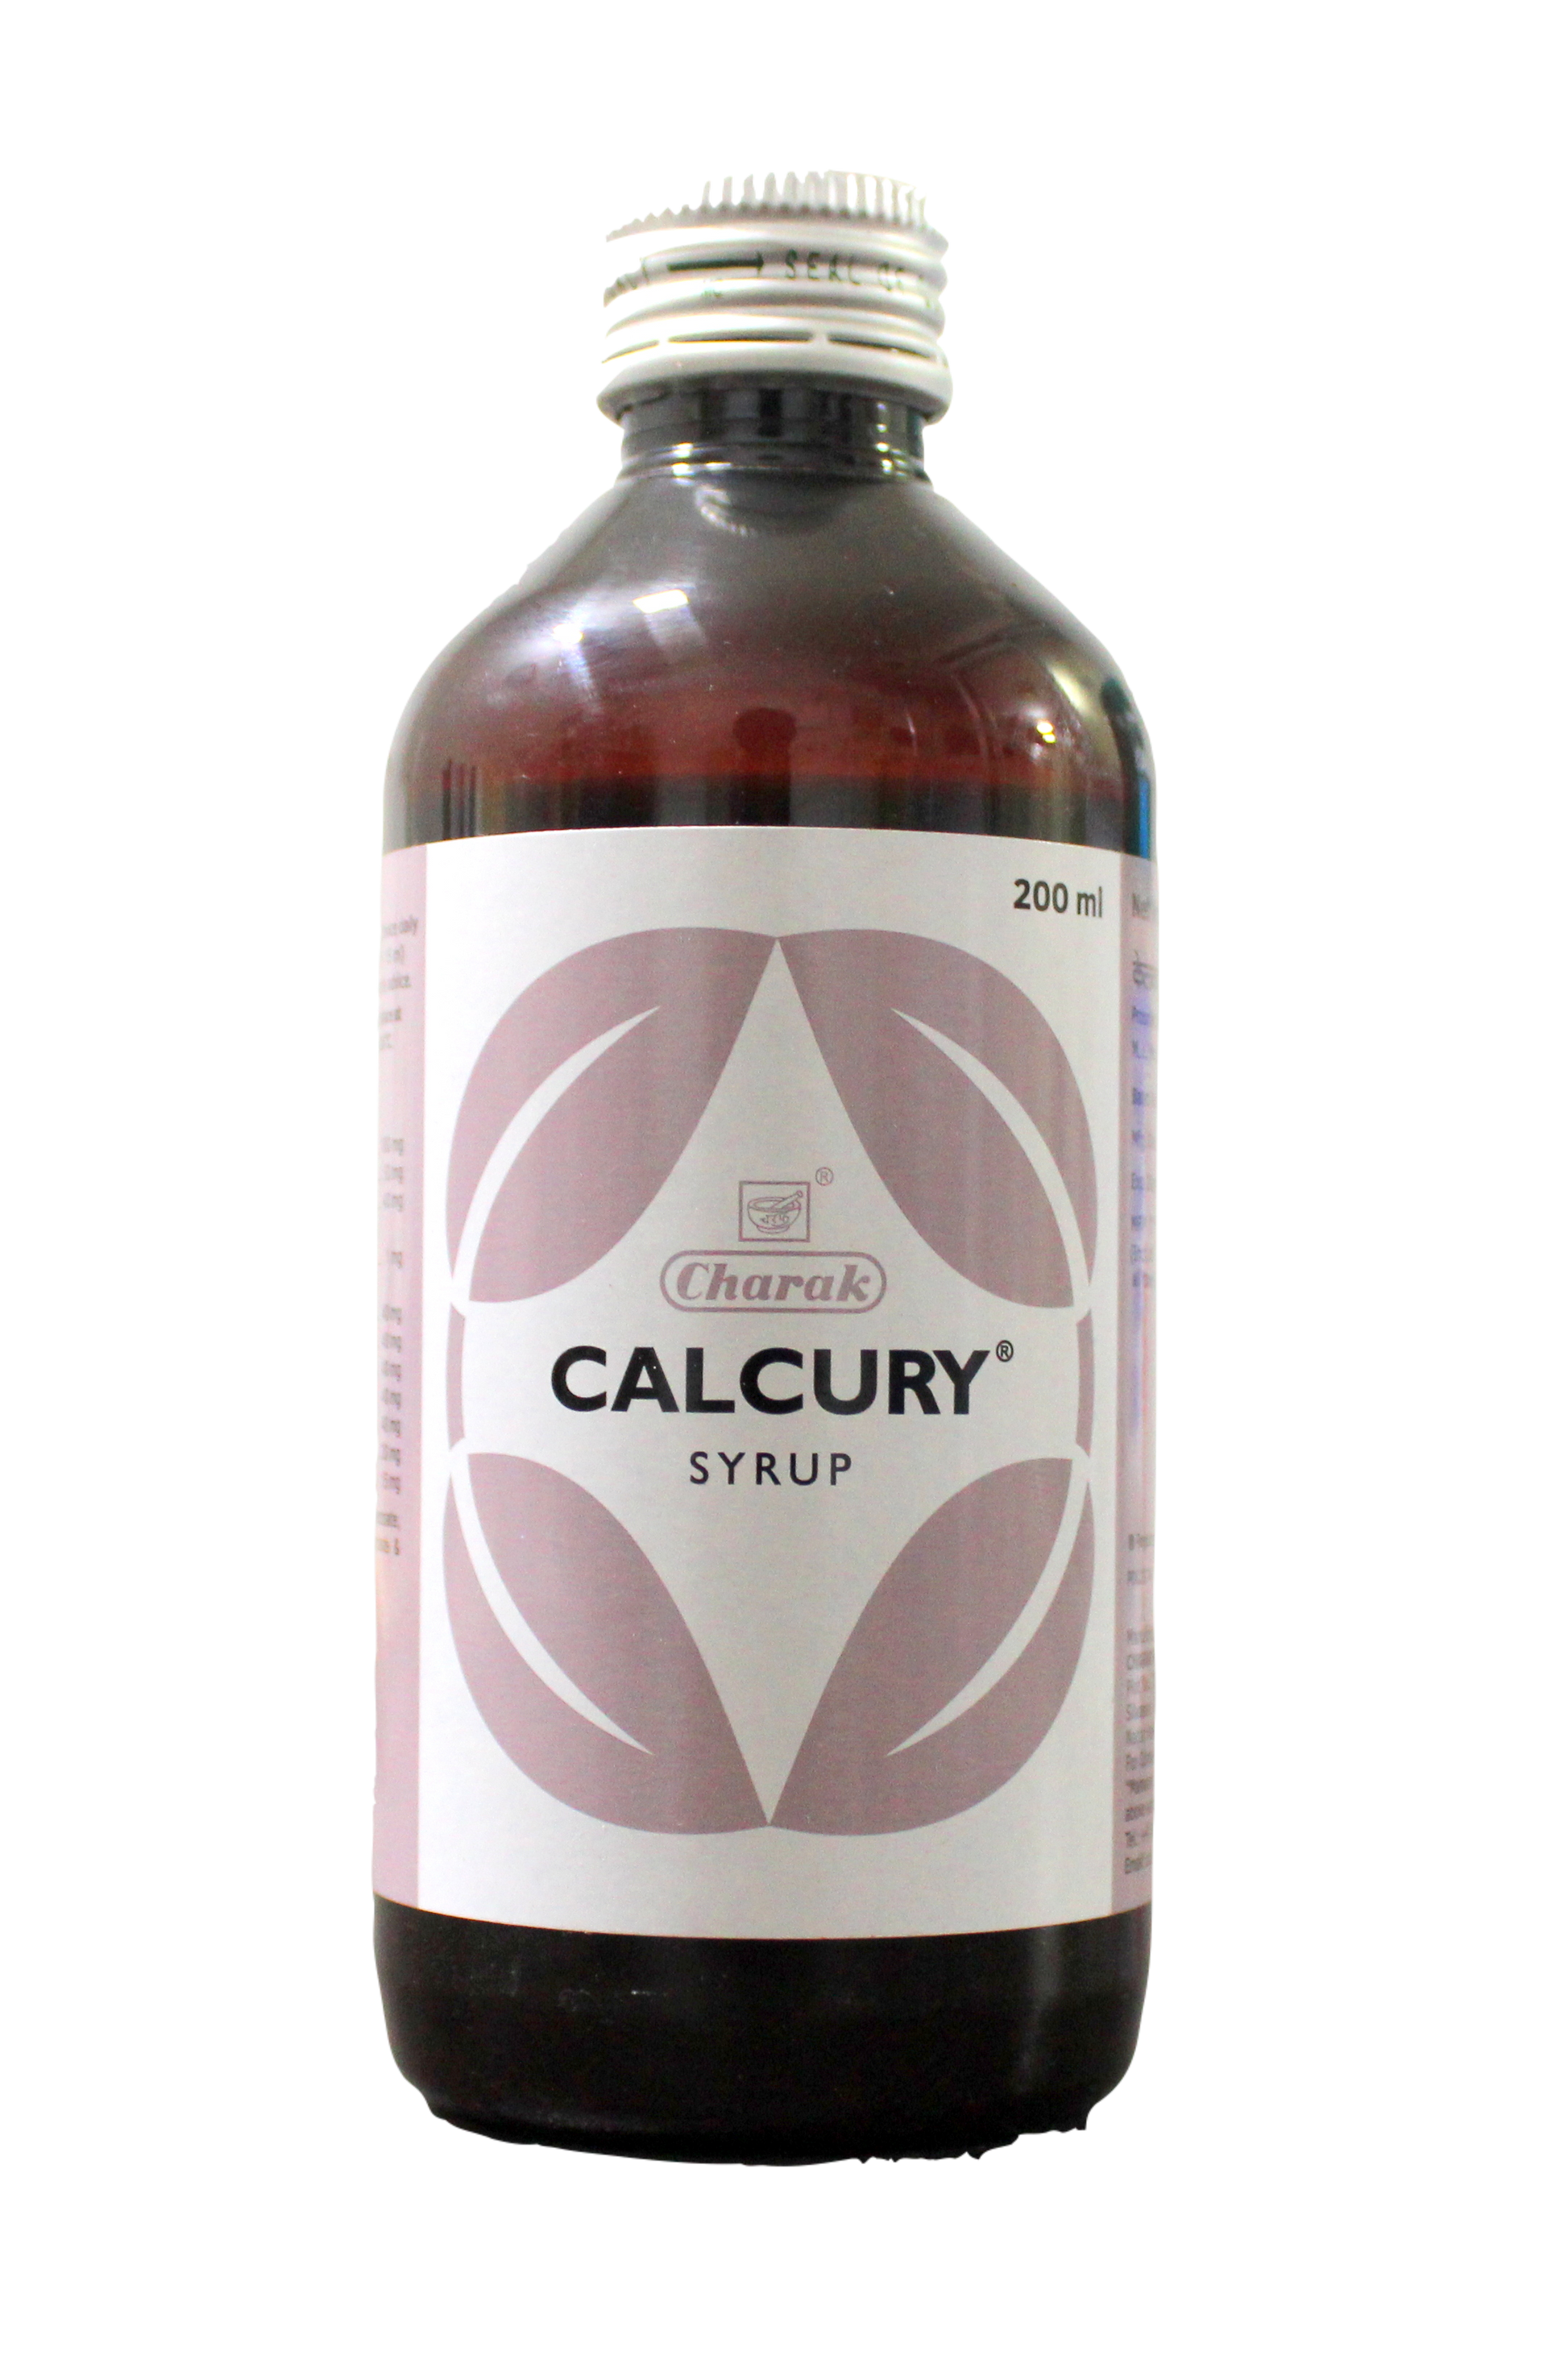 Calcury Syrup 200ml -  Charak - Medizzo.com